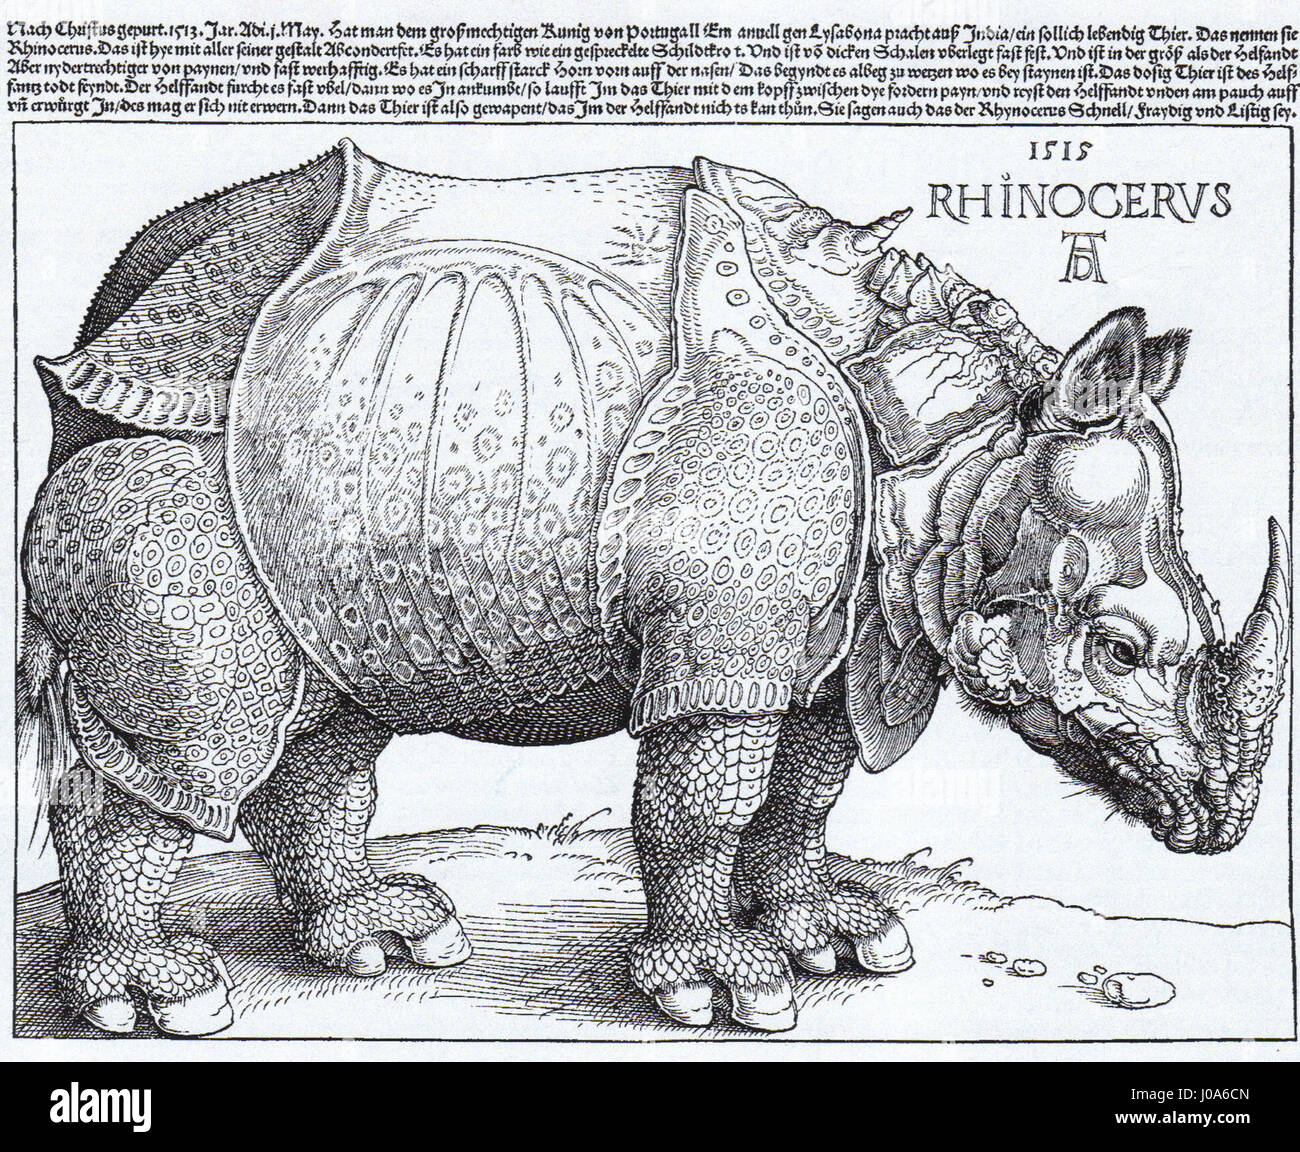 Rhinocerus xilografia (1515) Albrecht Dürer Foto Stock